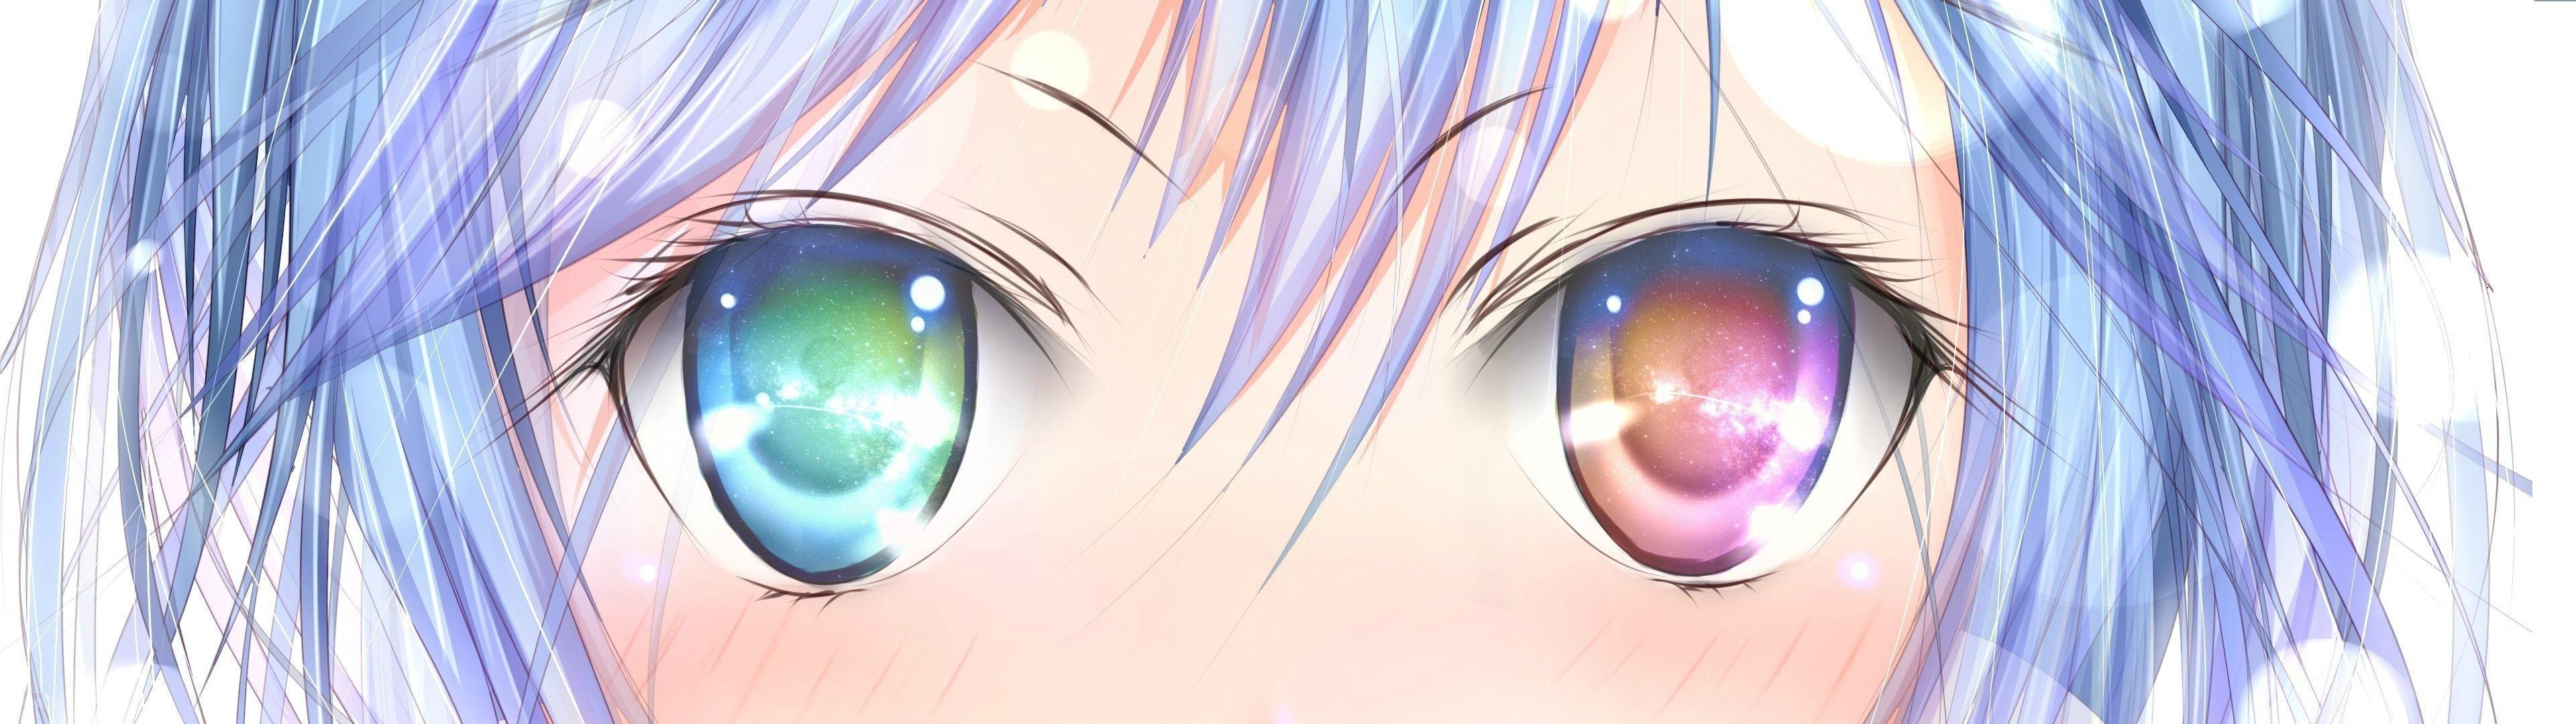 Free Wallpaper: Anime Eyes Wallpaper HD